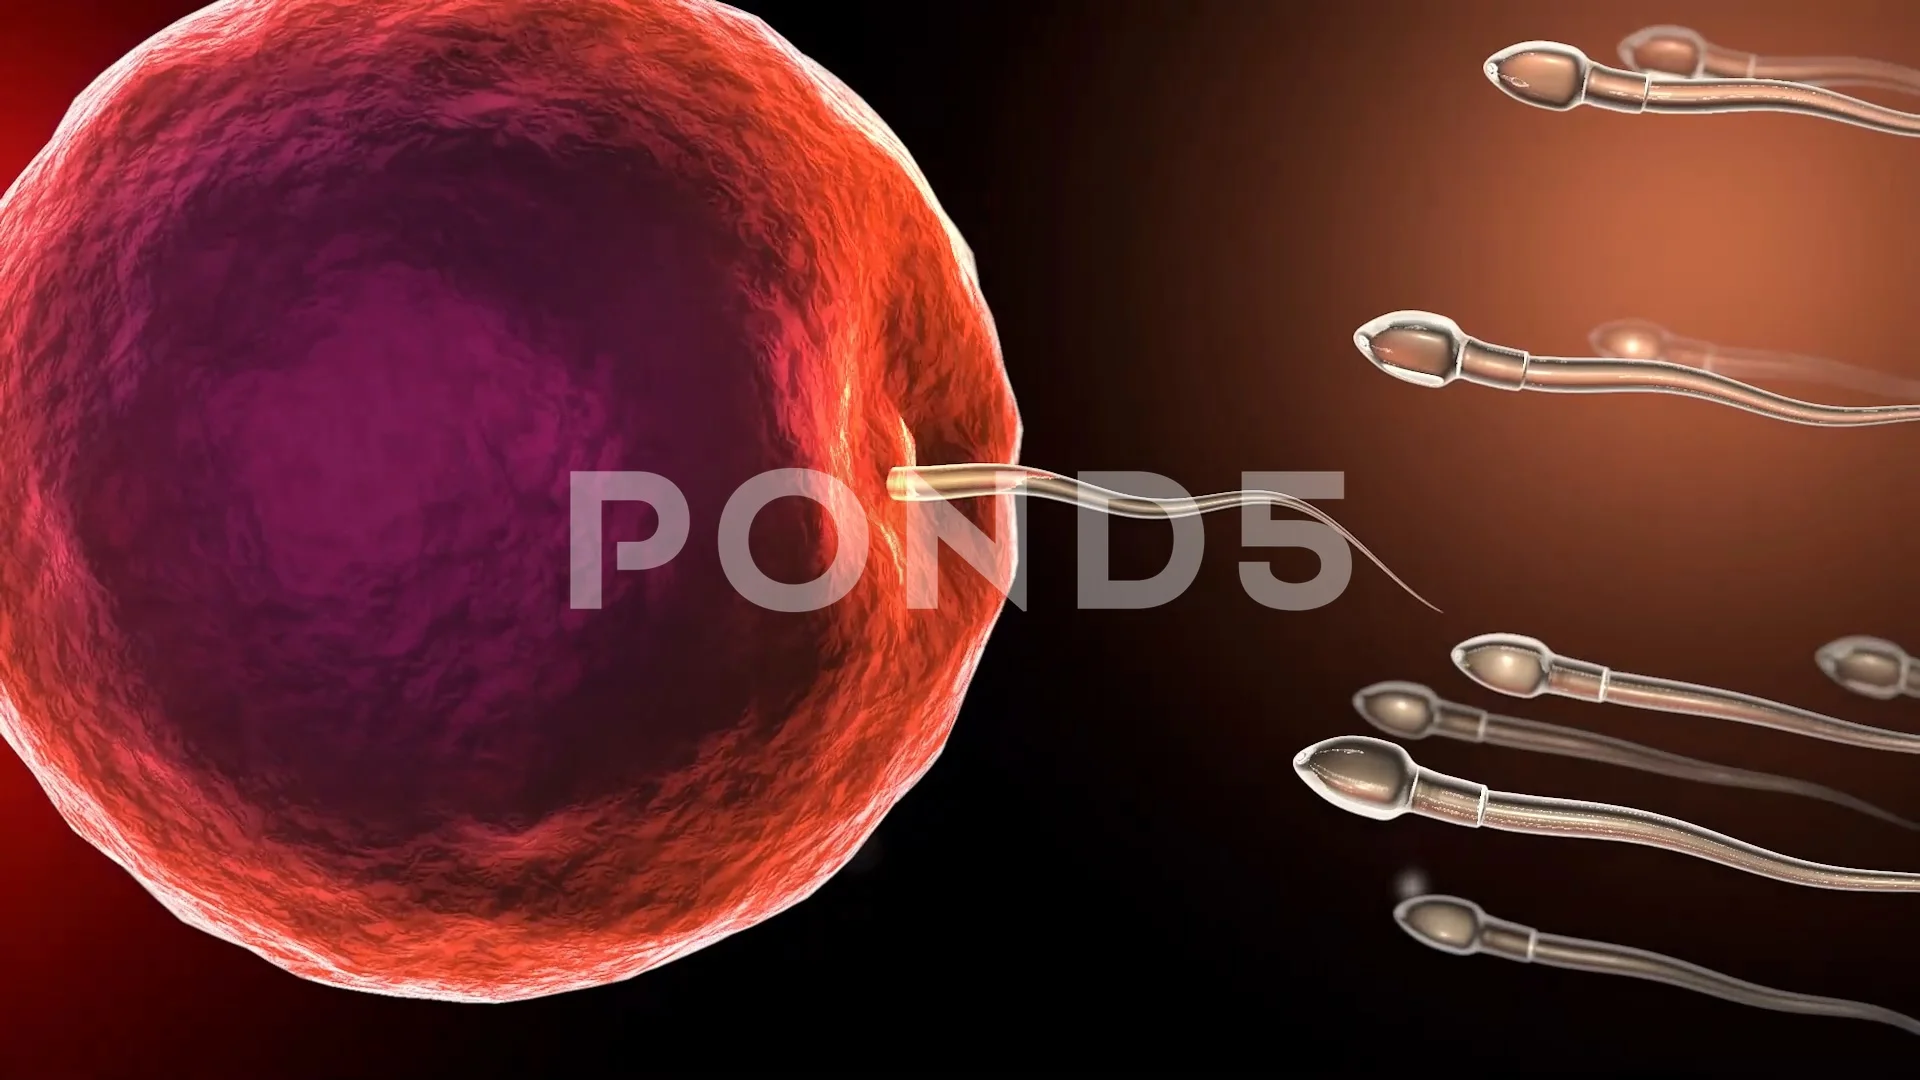 fertilized human egg